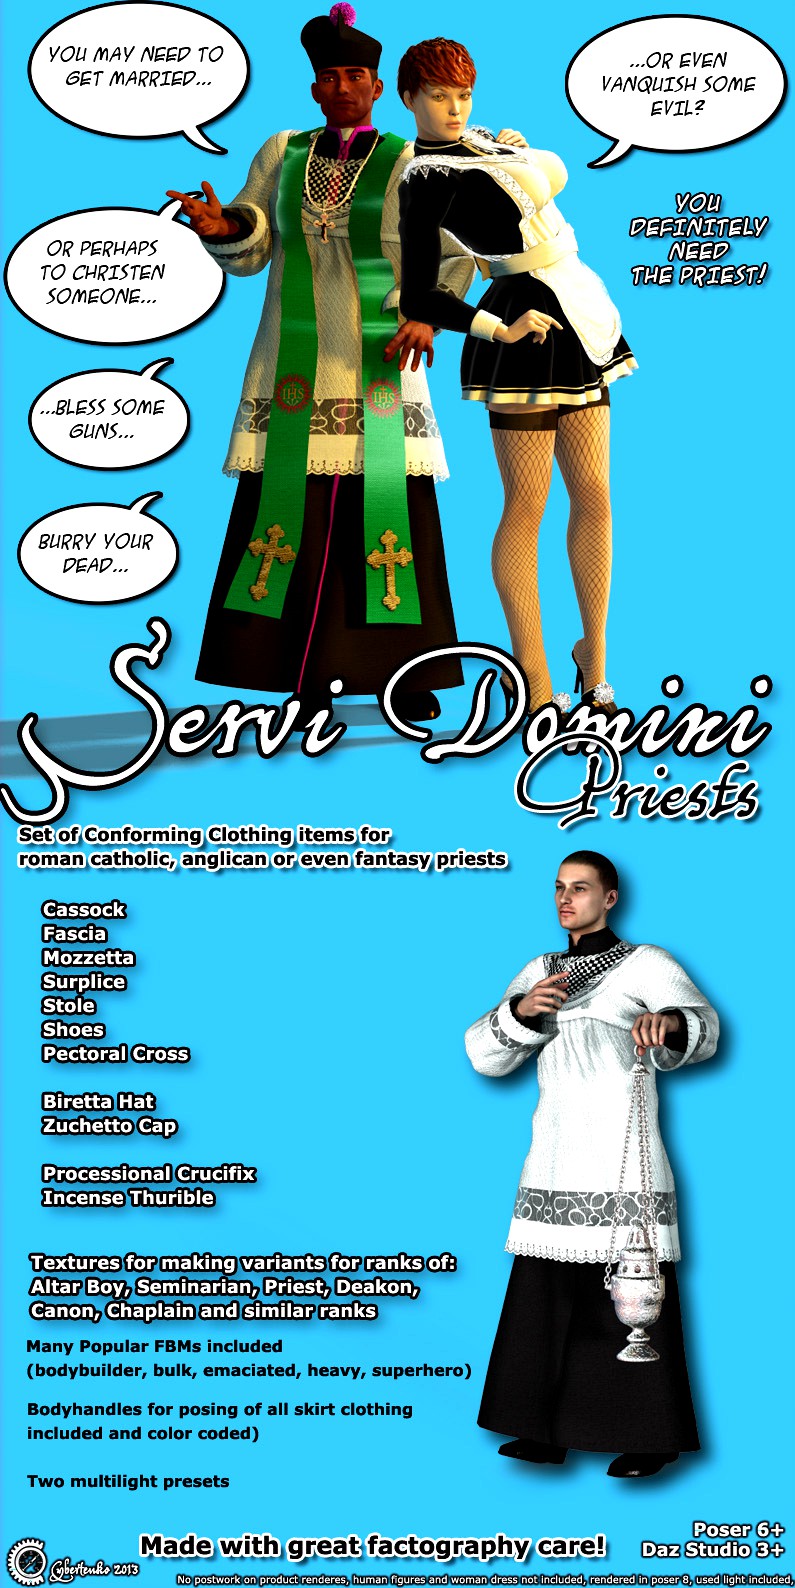 Servi Domini - Priests - Extended License